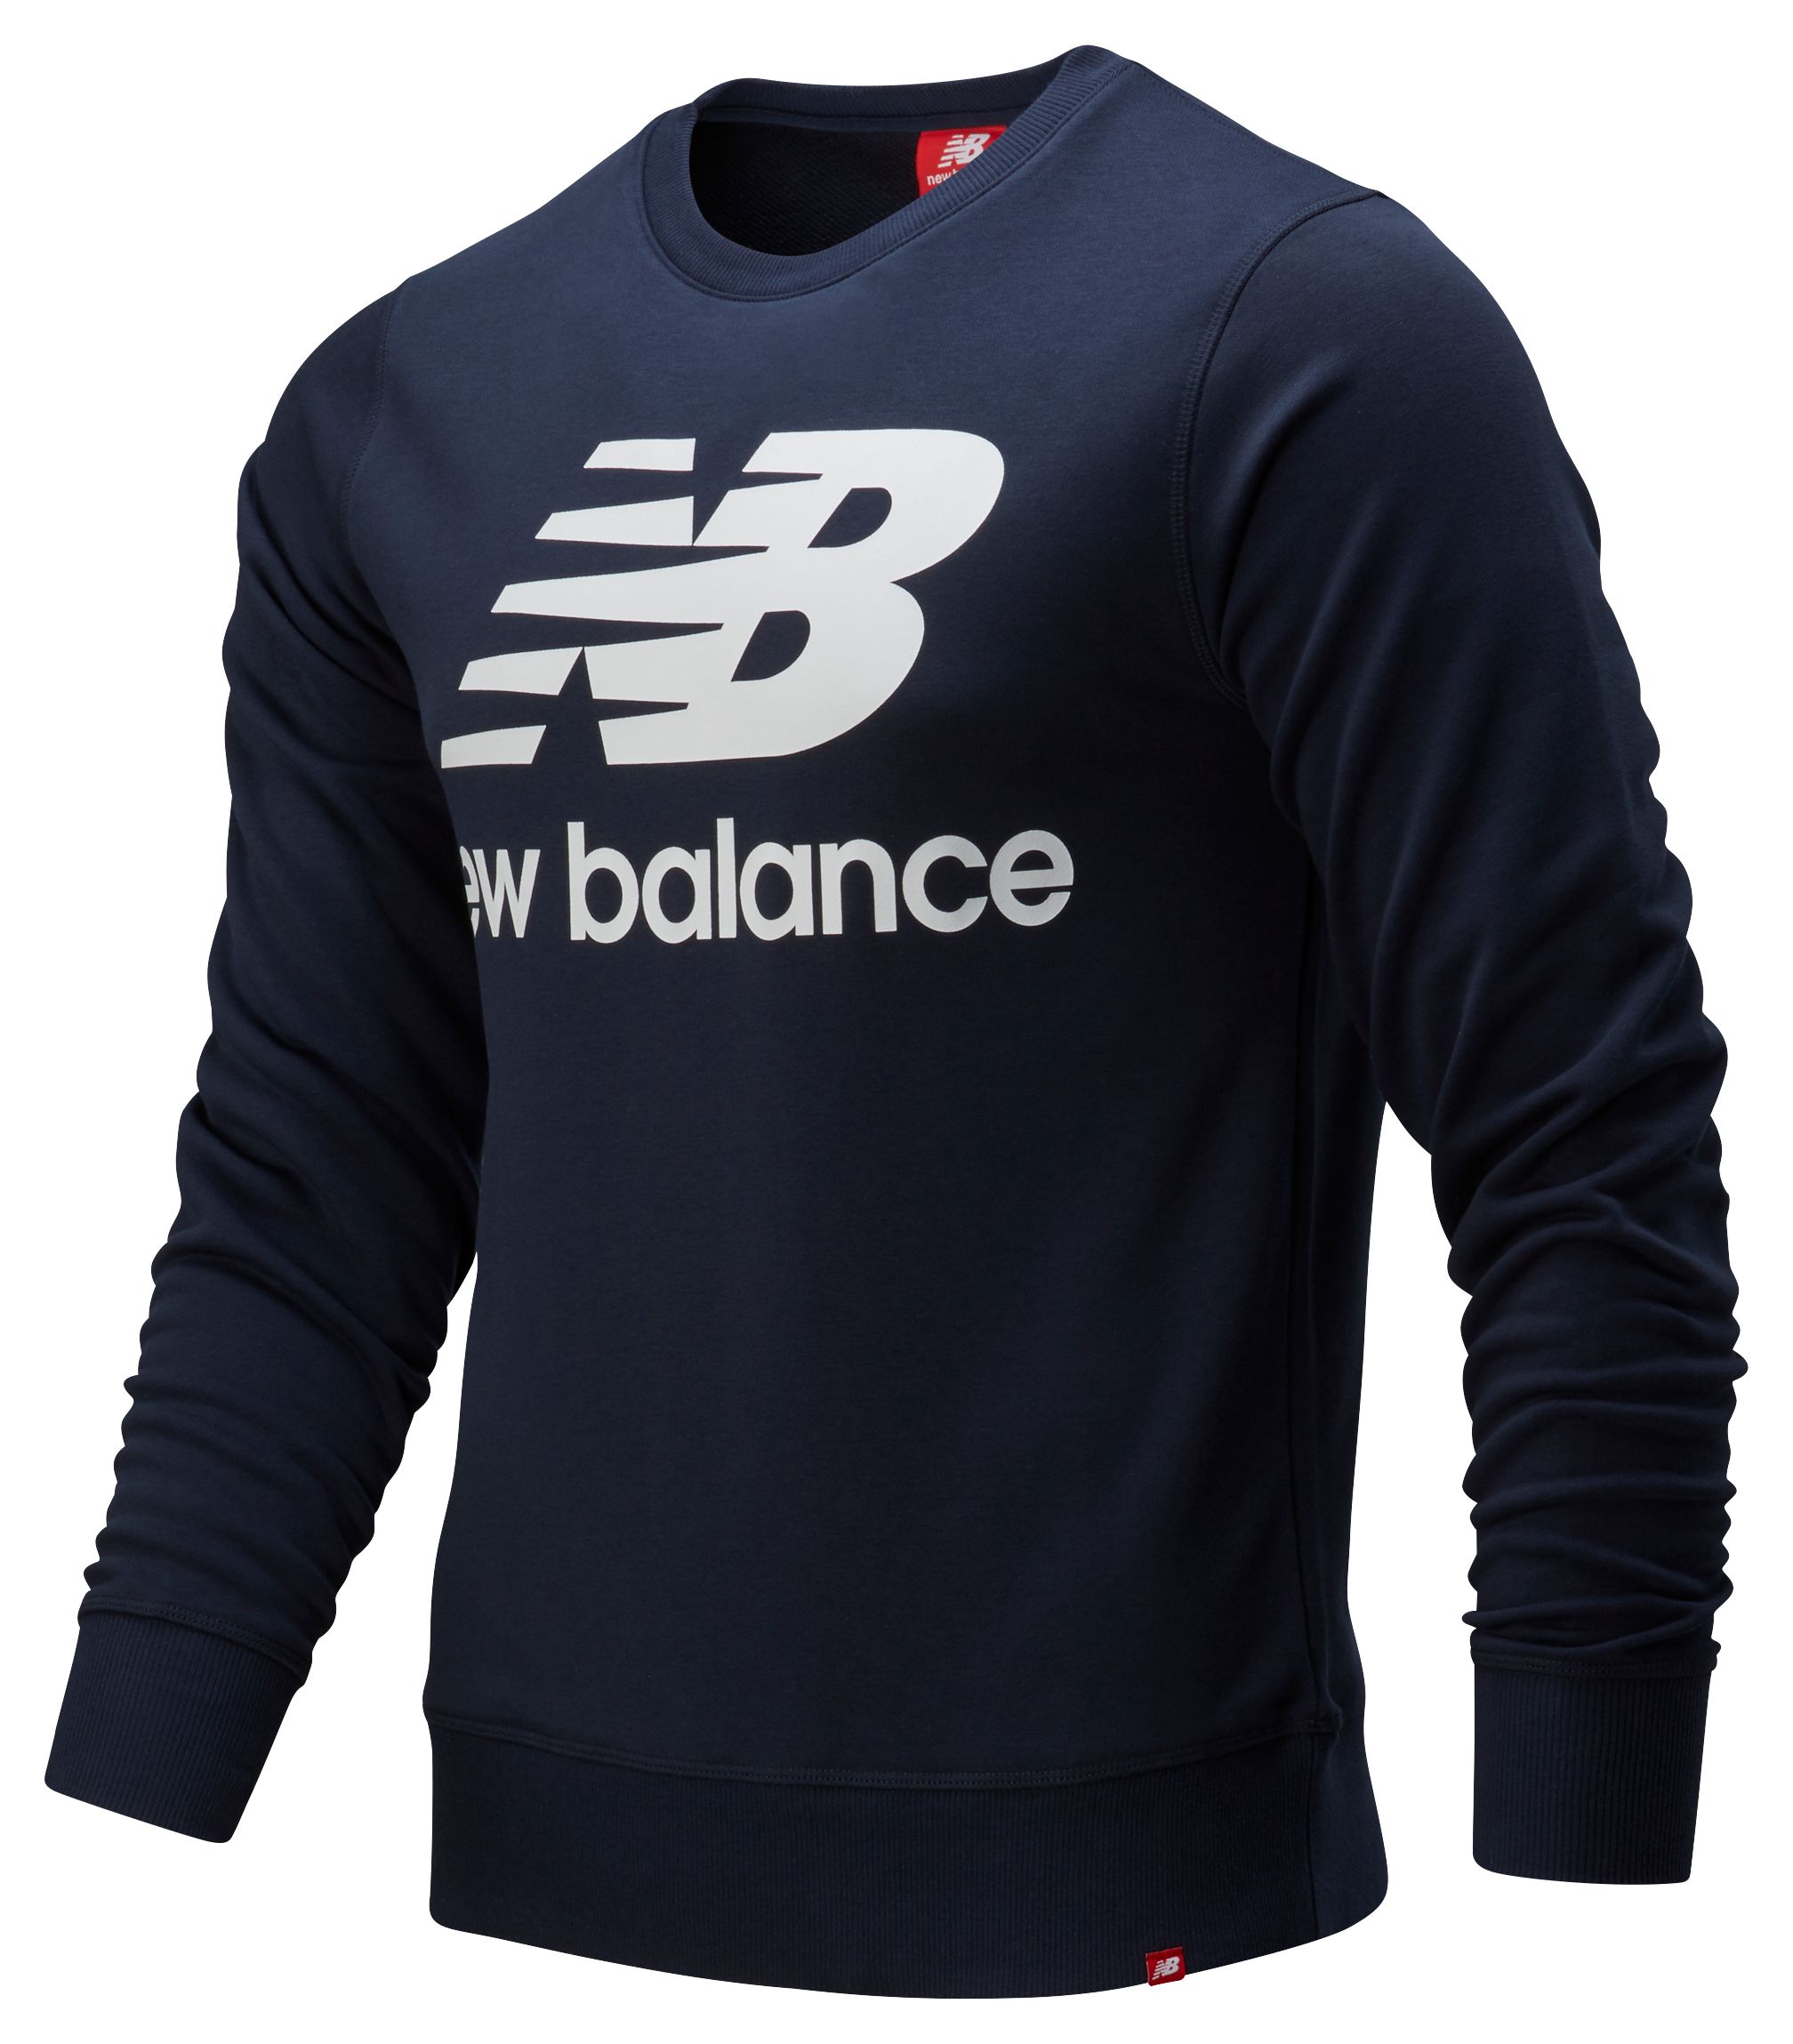 men's new balance sweatsuit